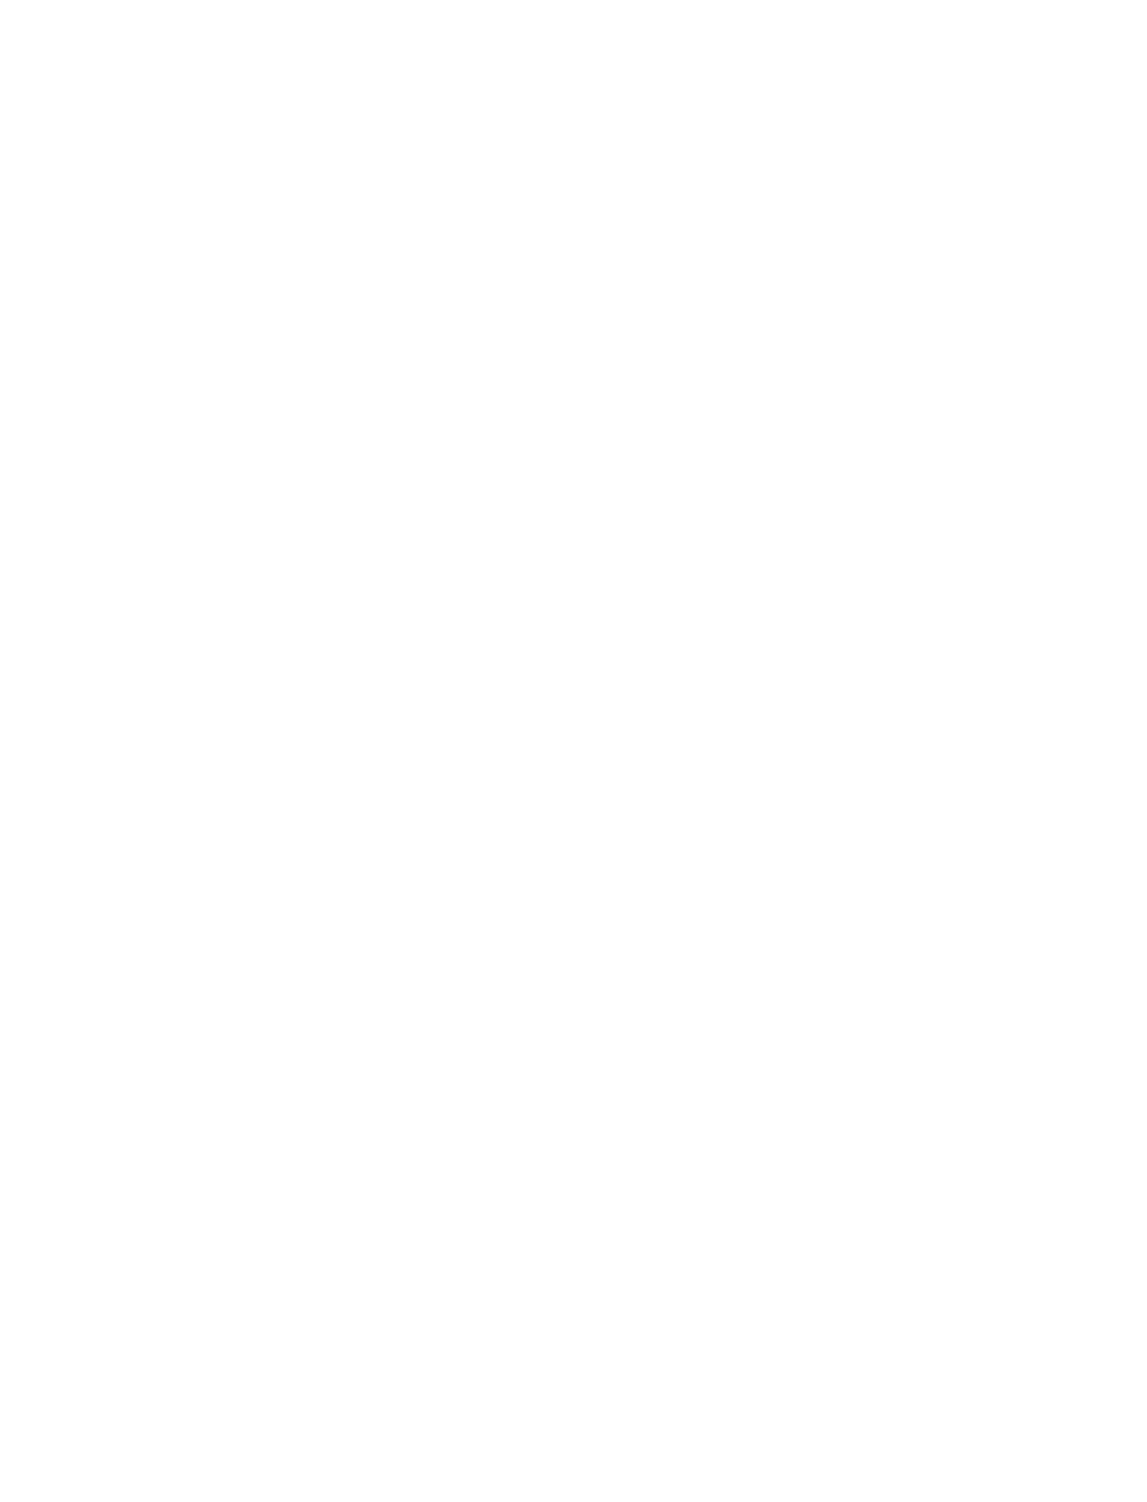 Experian logo for dark backgrounds (transparent PNG)